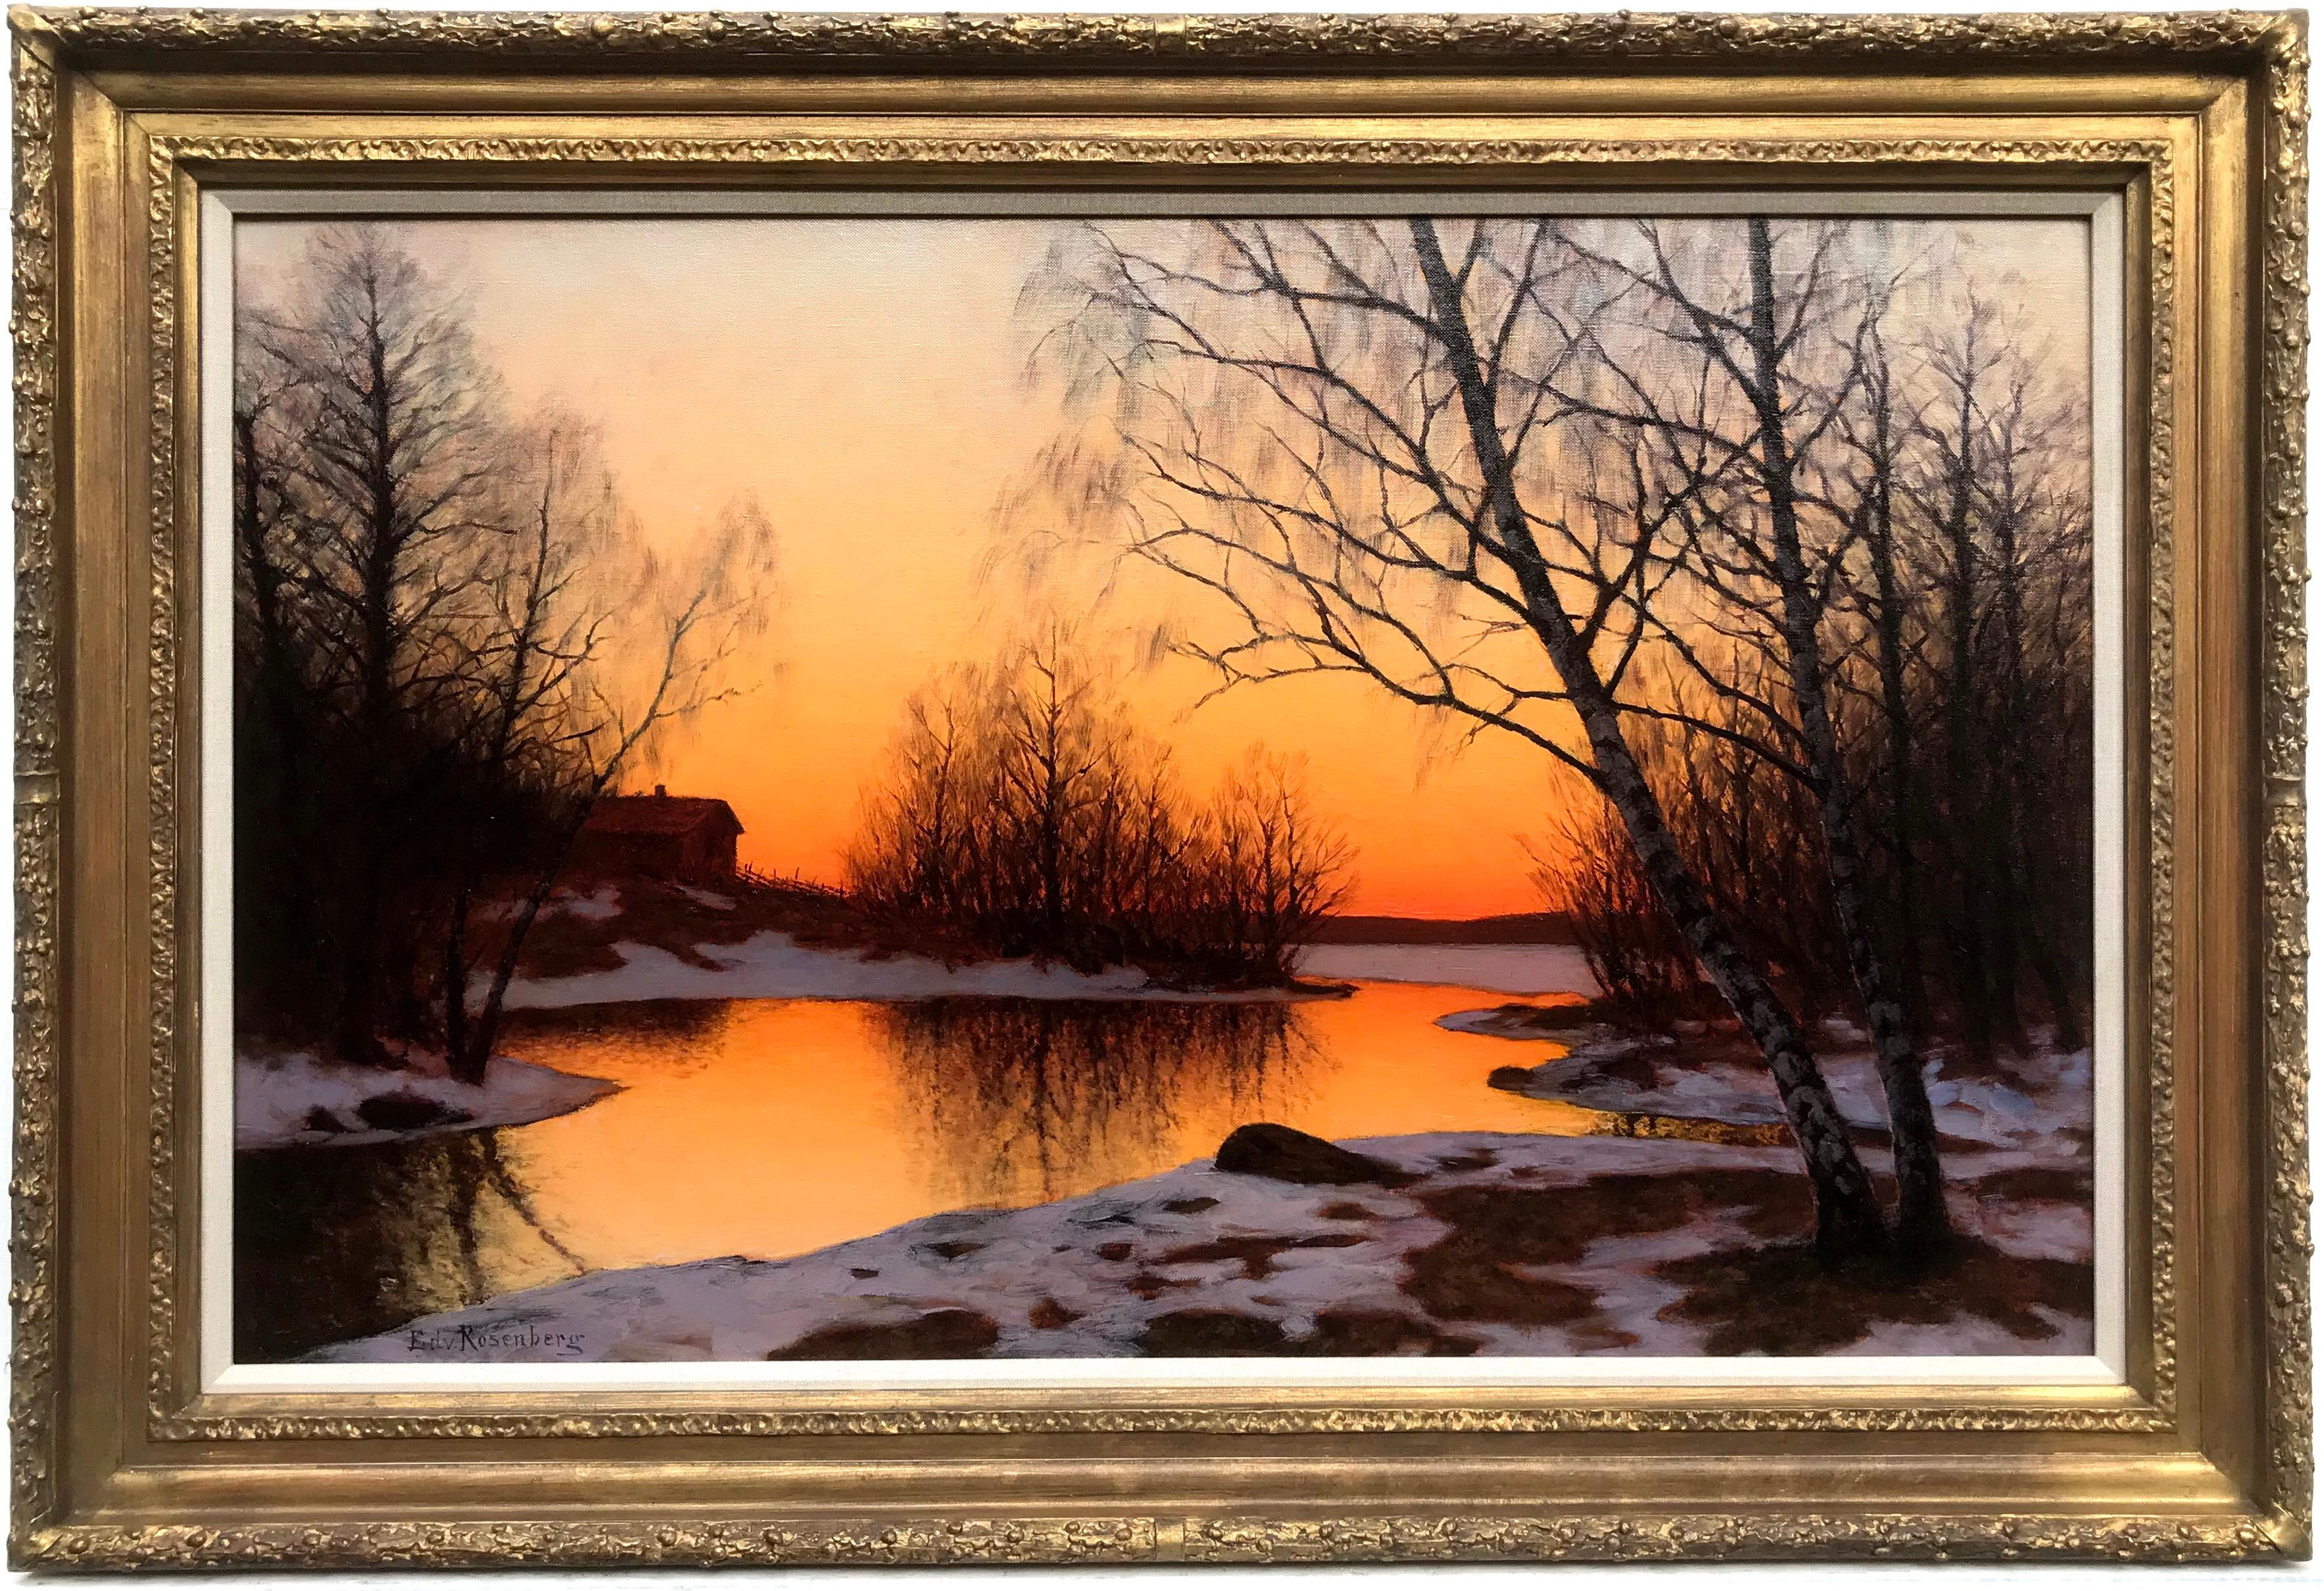 Edvard Rosenberg Landscape Painting - Winter landscape of melting snow and reflective evening sunset, Oil on Canvas 